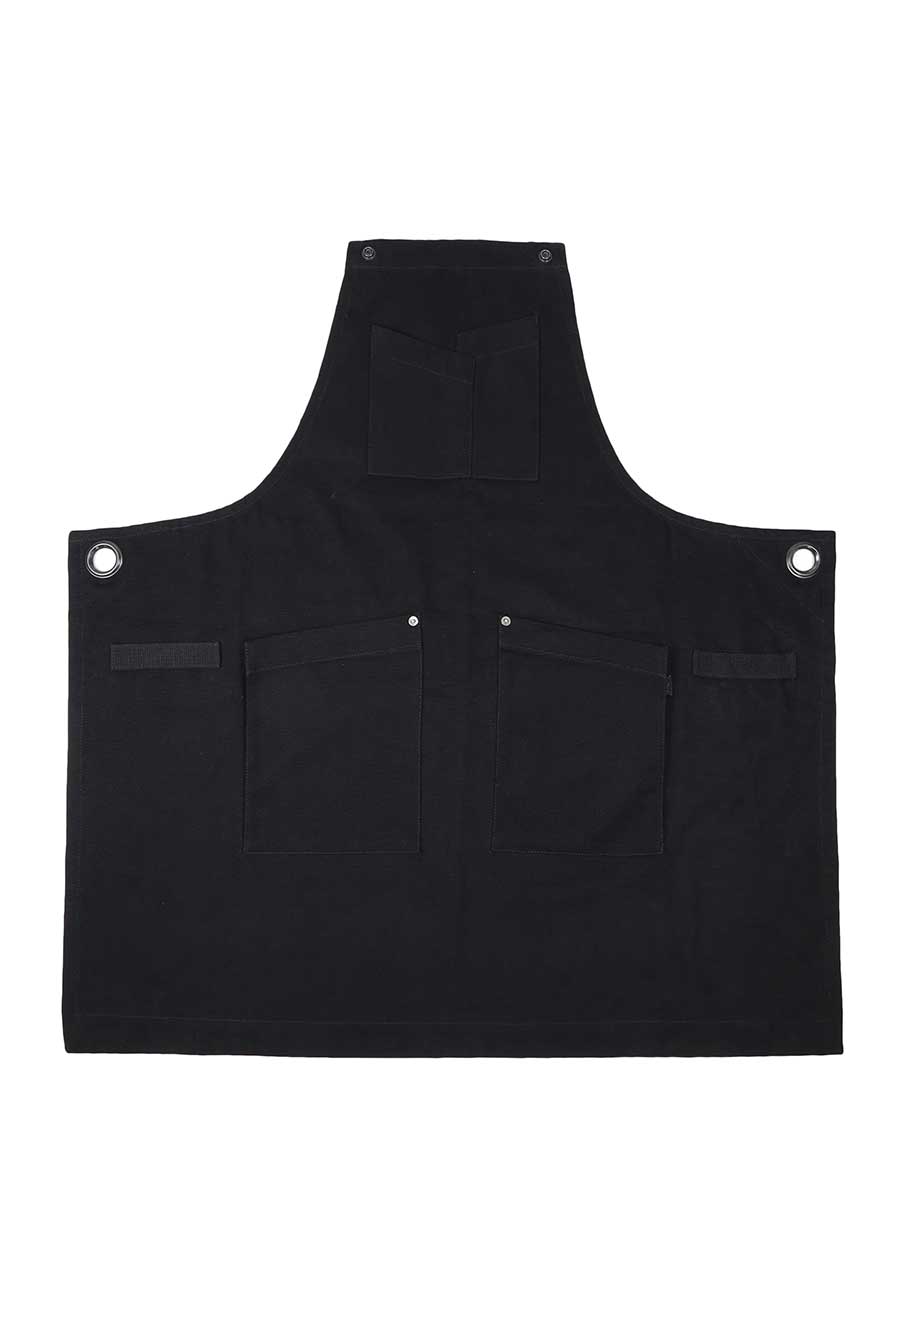 Slant Pocket Bib apron - Straps Not Included